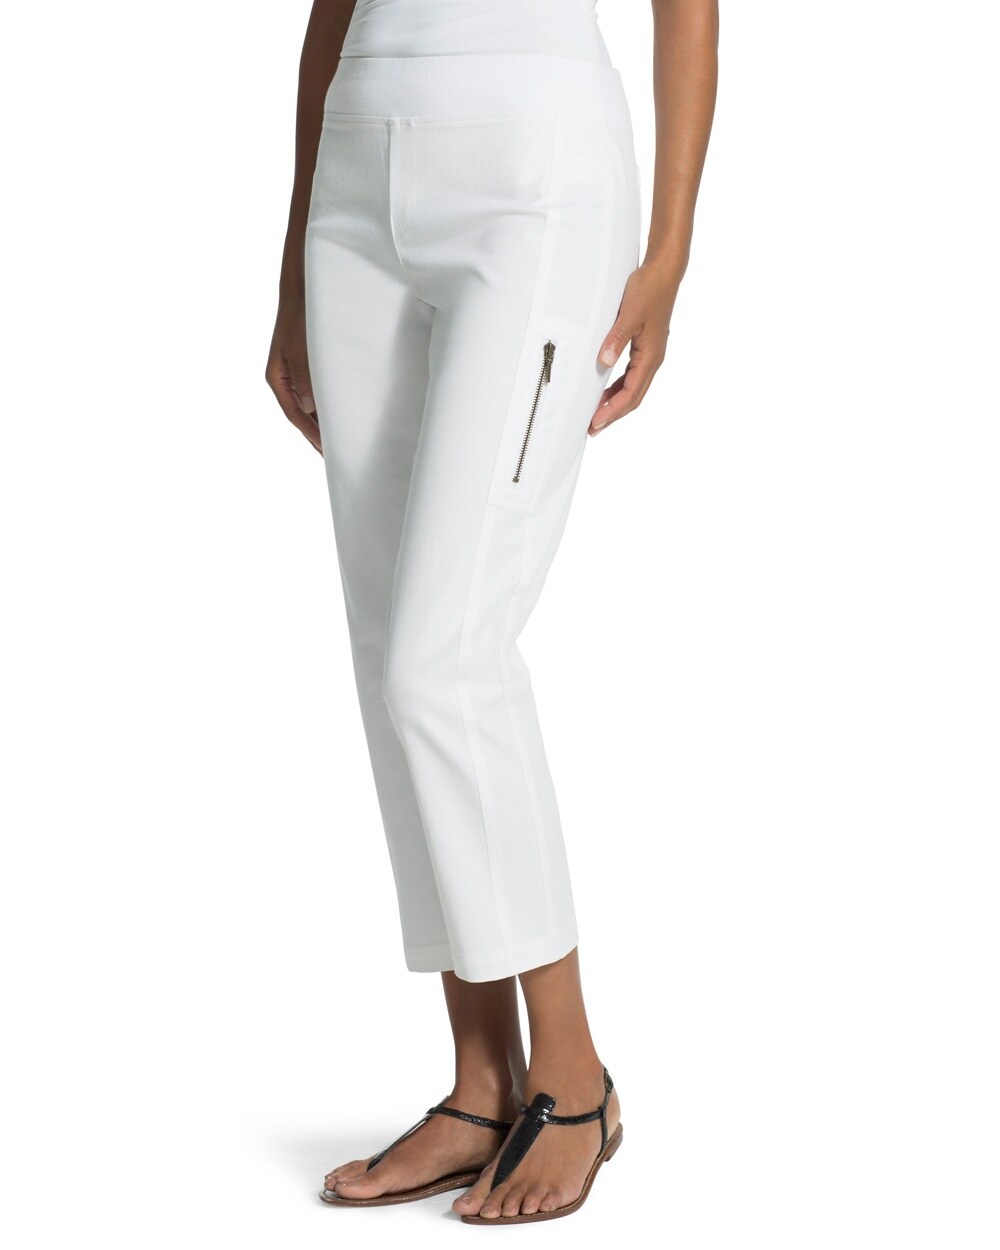 Zenergy Crop Pants in White